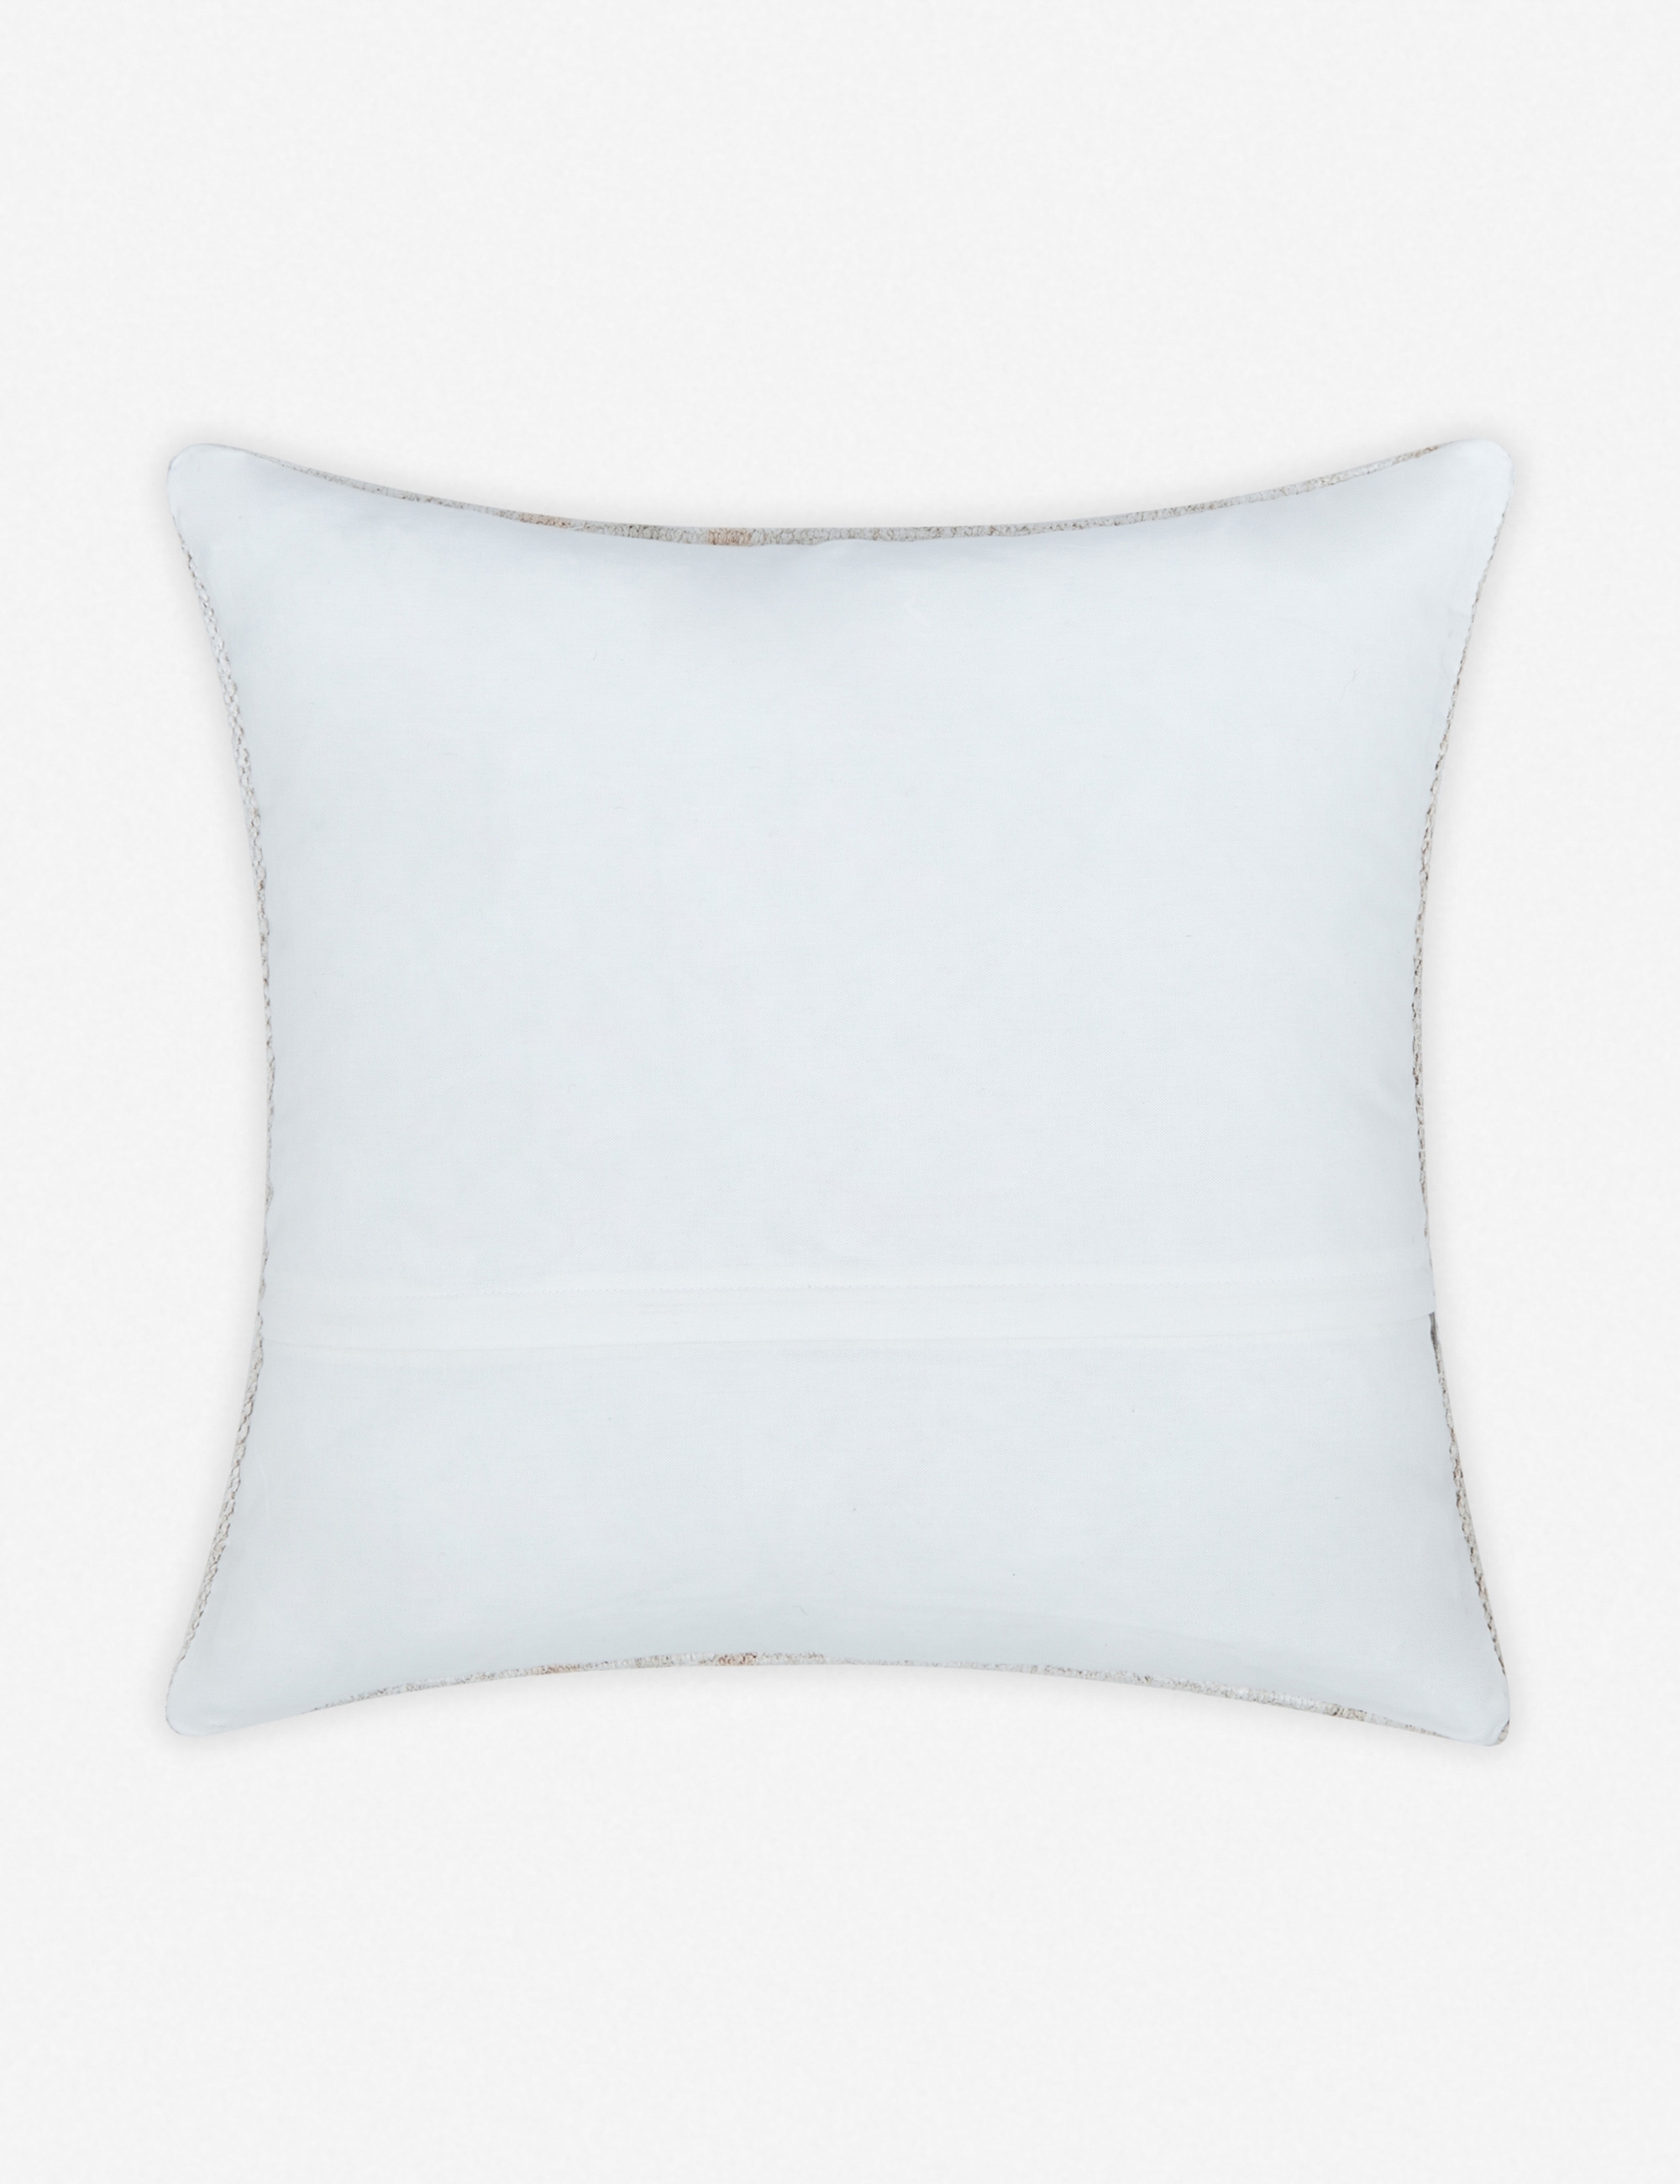 Sedona Vintage Hemp Pillow - Image 2